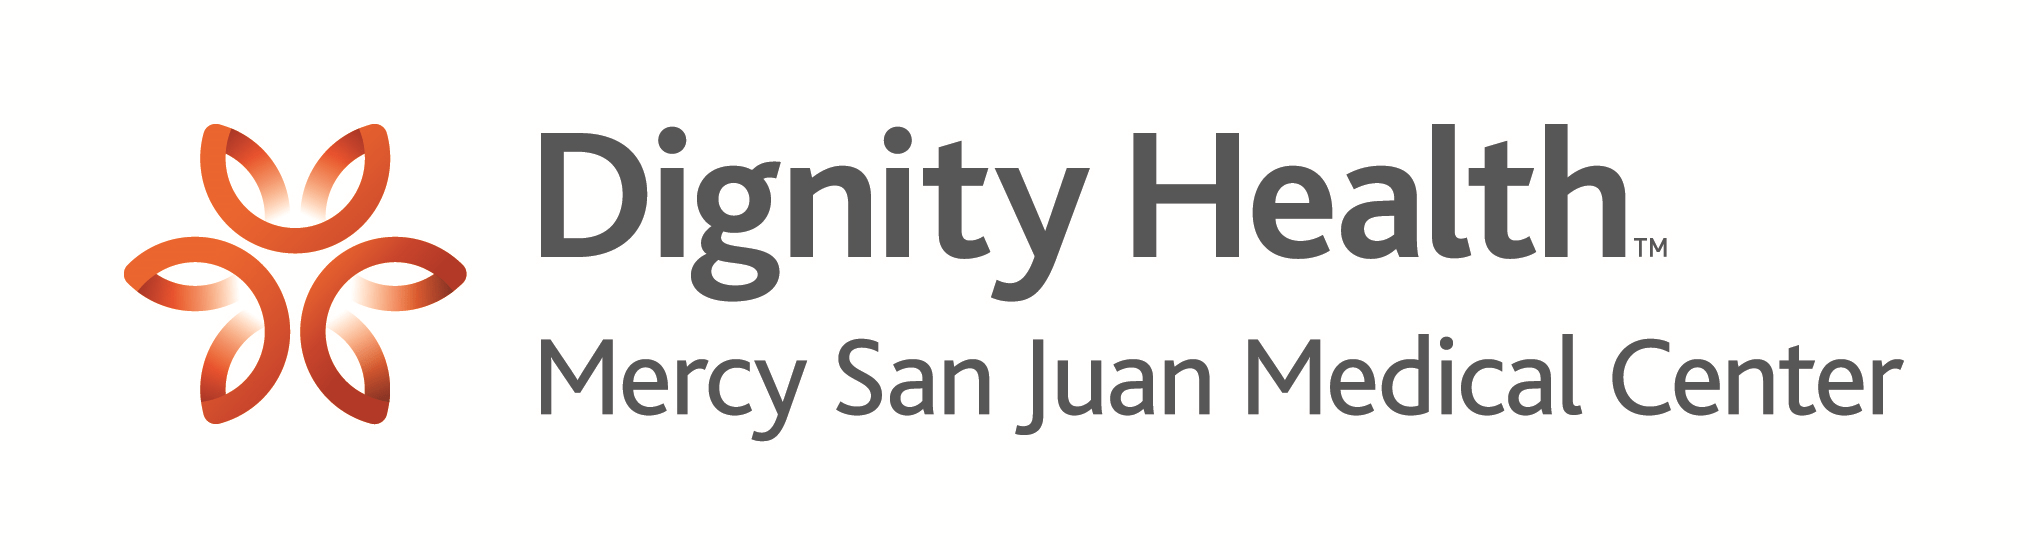 Dignity Health MSJMC 2013 logo